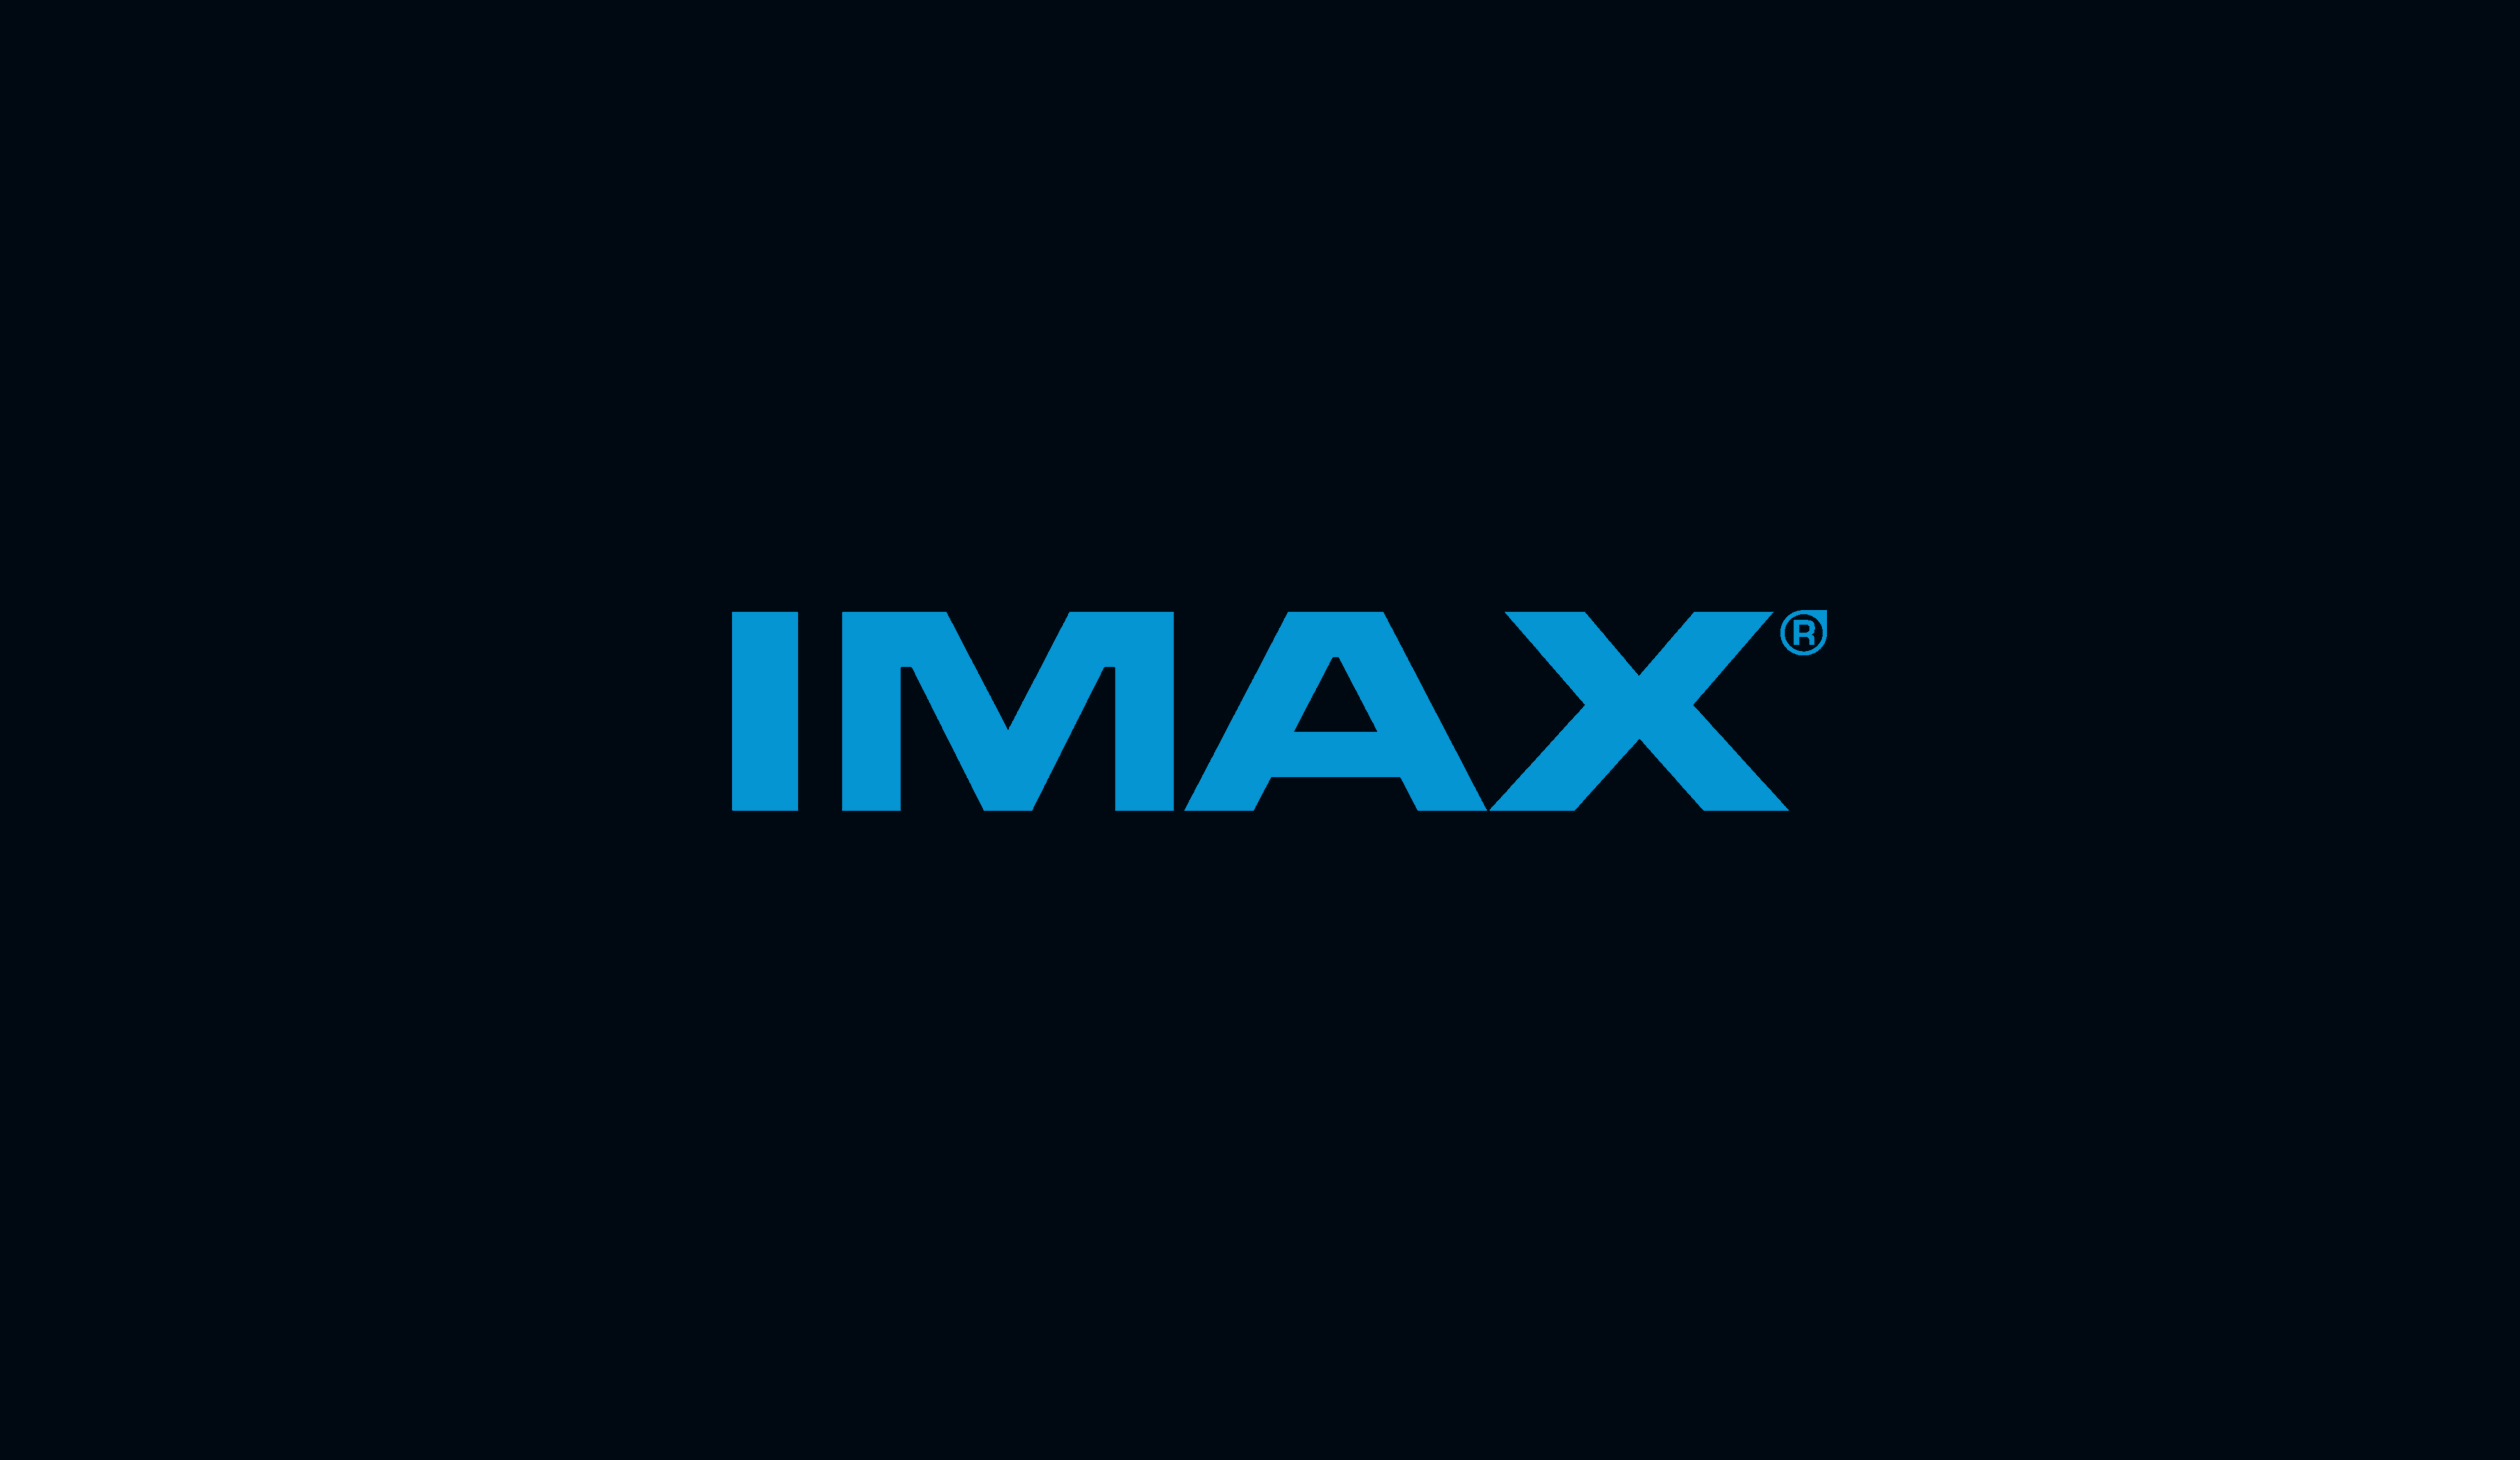 Viva max films. IMAX логотип. Кинотеатр IMAX логотип. IMAX слоган. IMAX HD аватар.